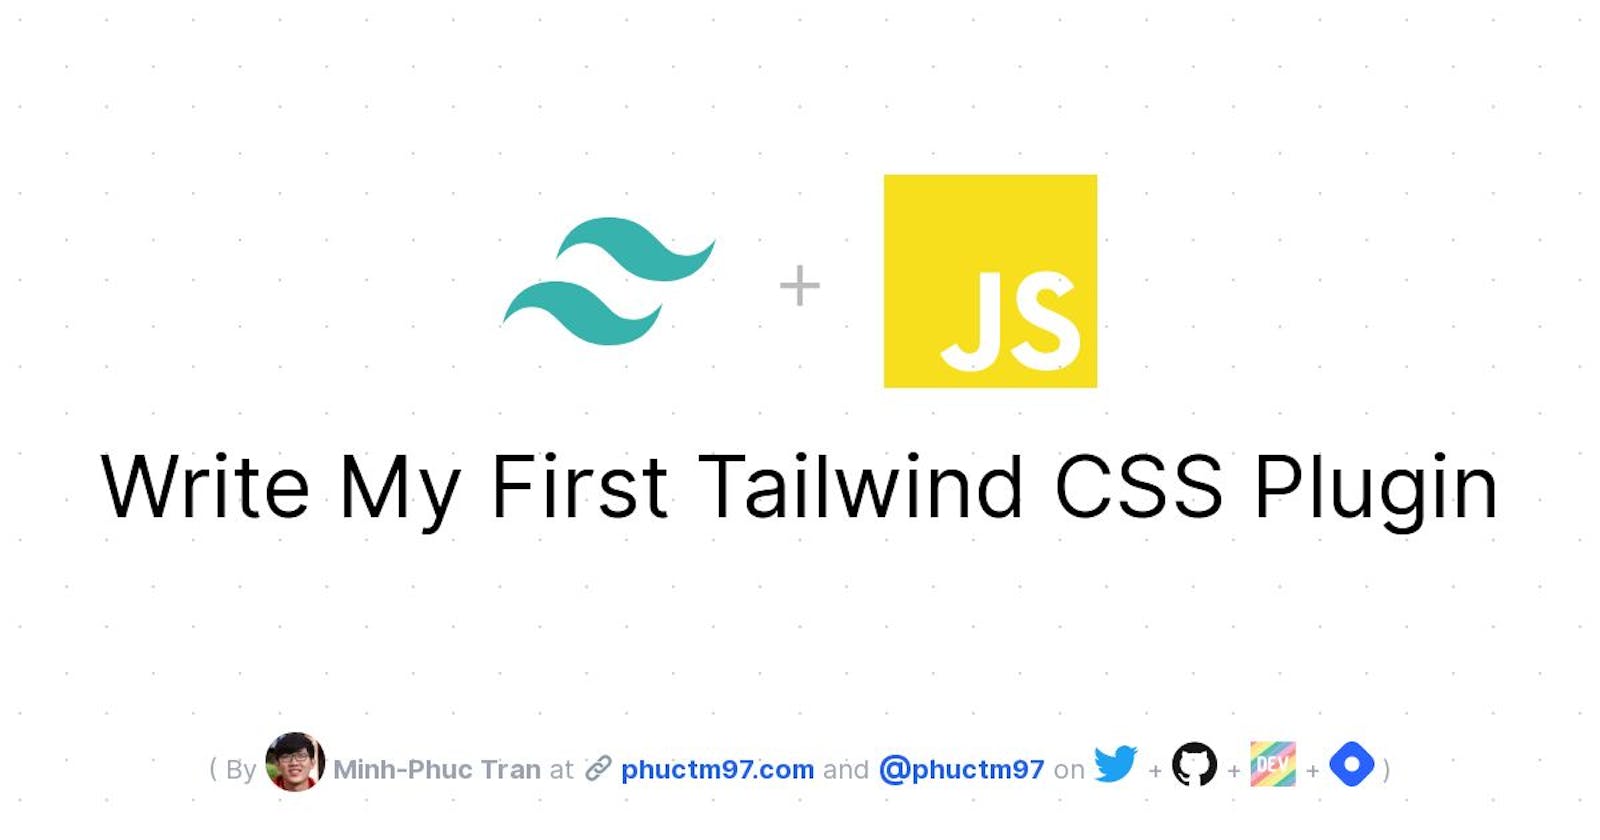 Write My First Tailwind CSS Plugin